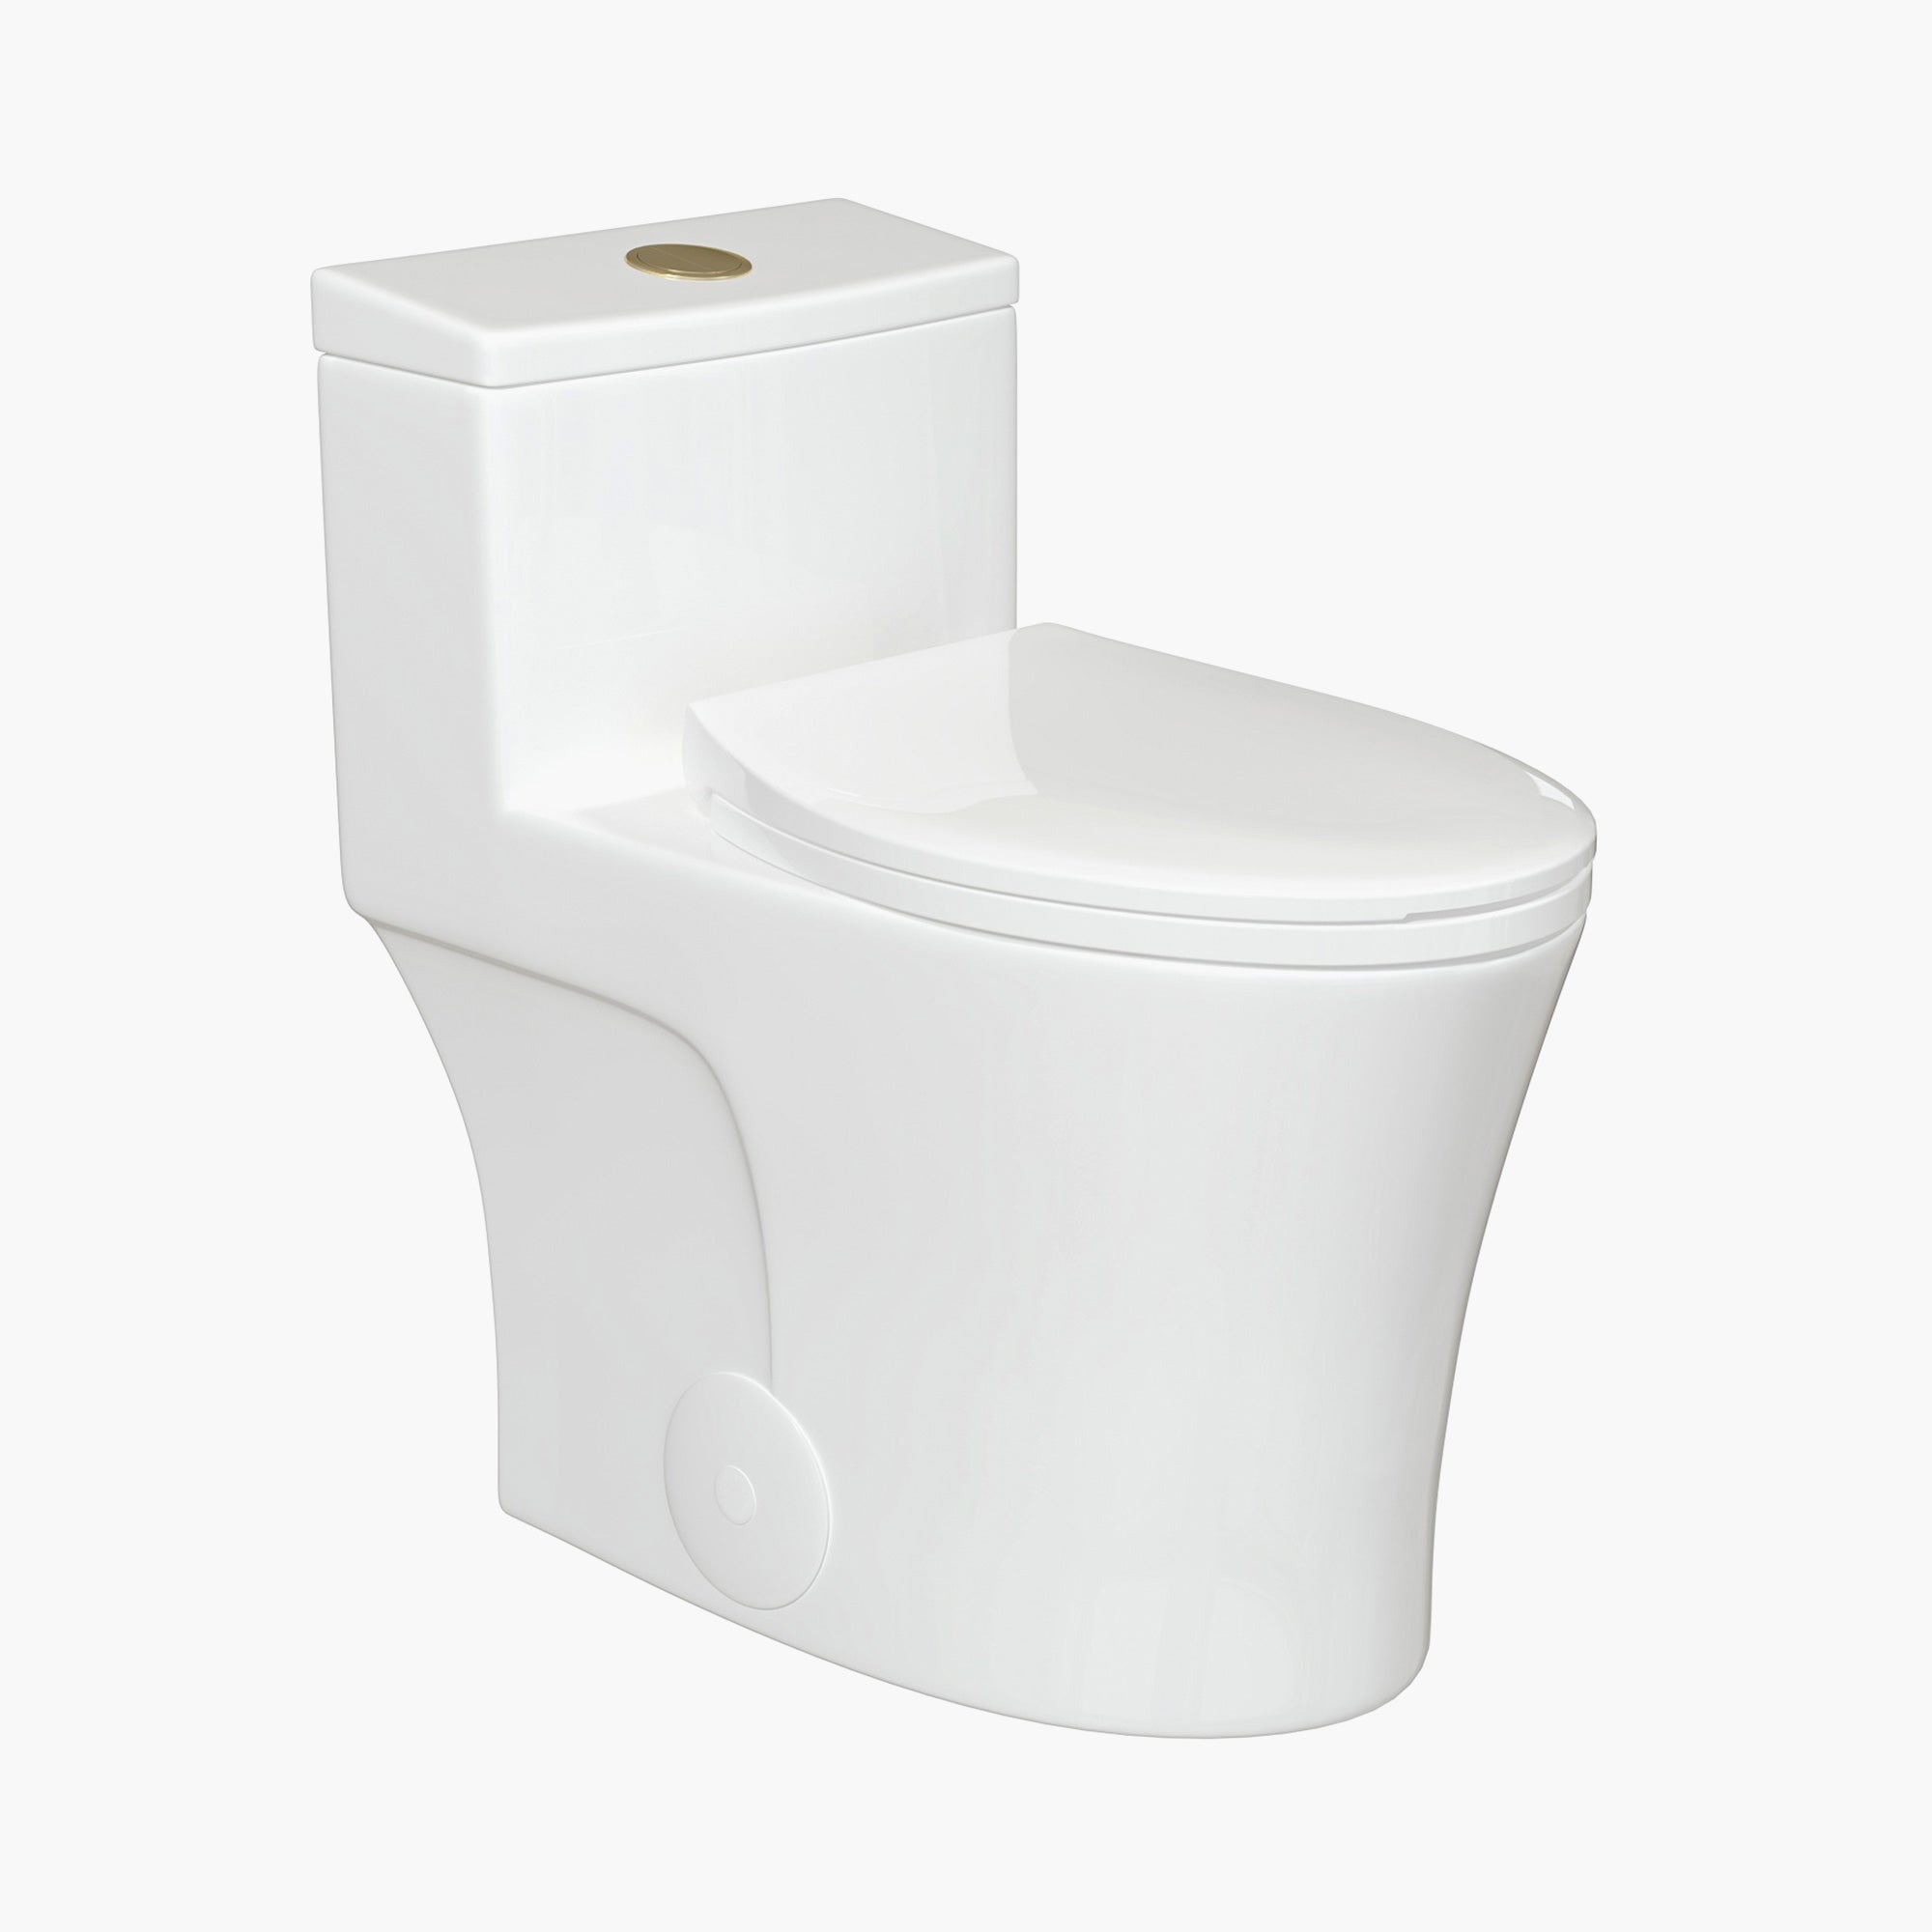 HOROW Elongated Dual Flush One Piece Toilet ADA Floor Mounted Toilet Model T0338W-G